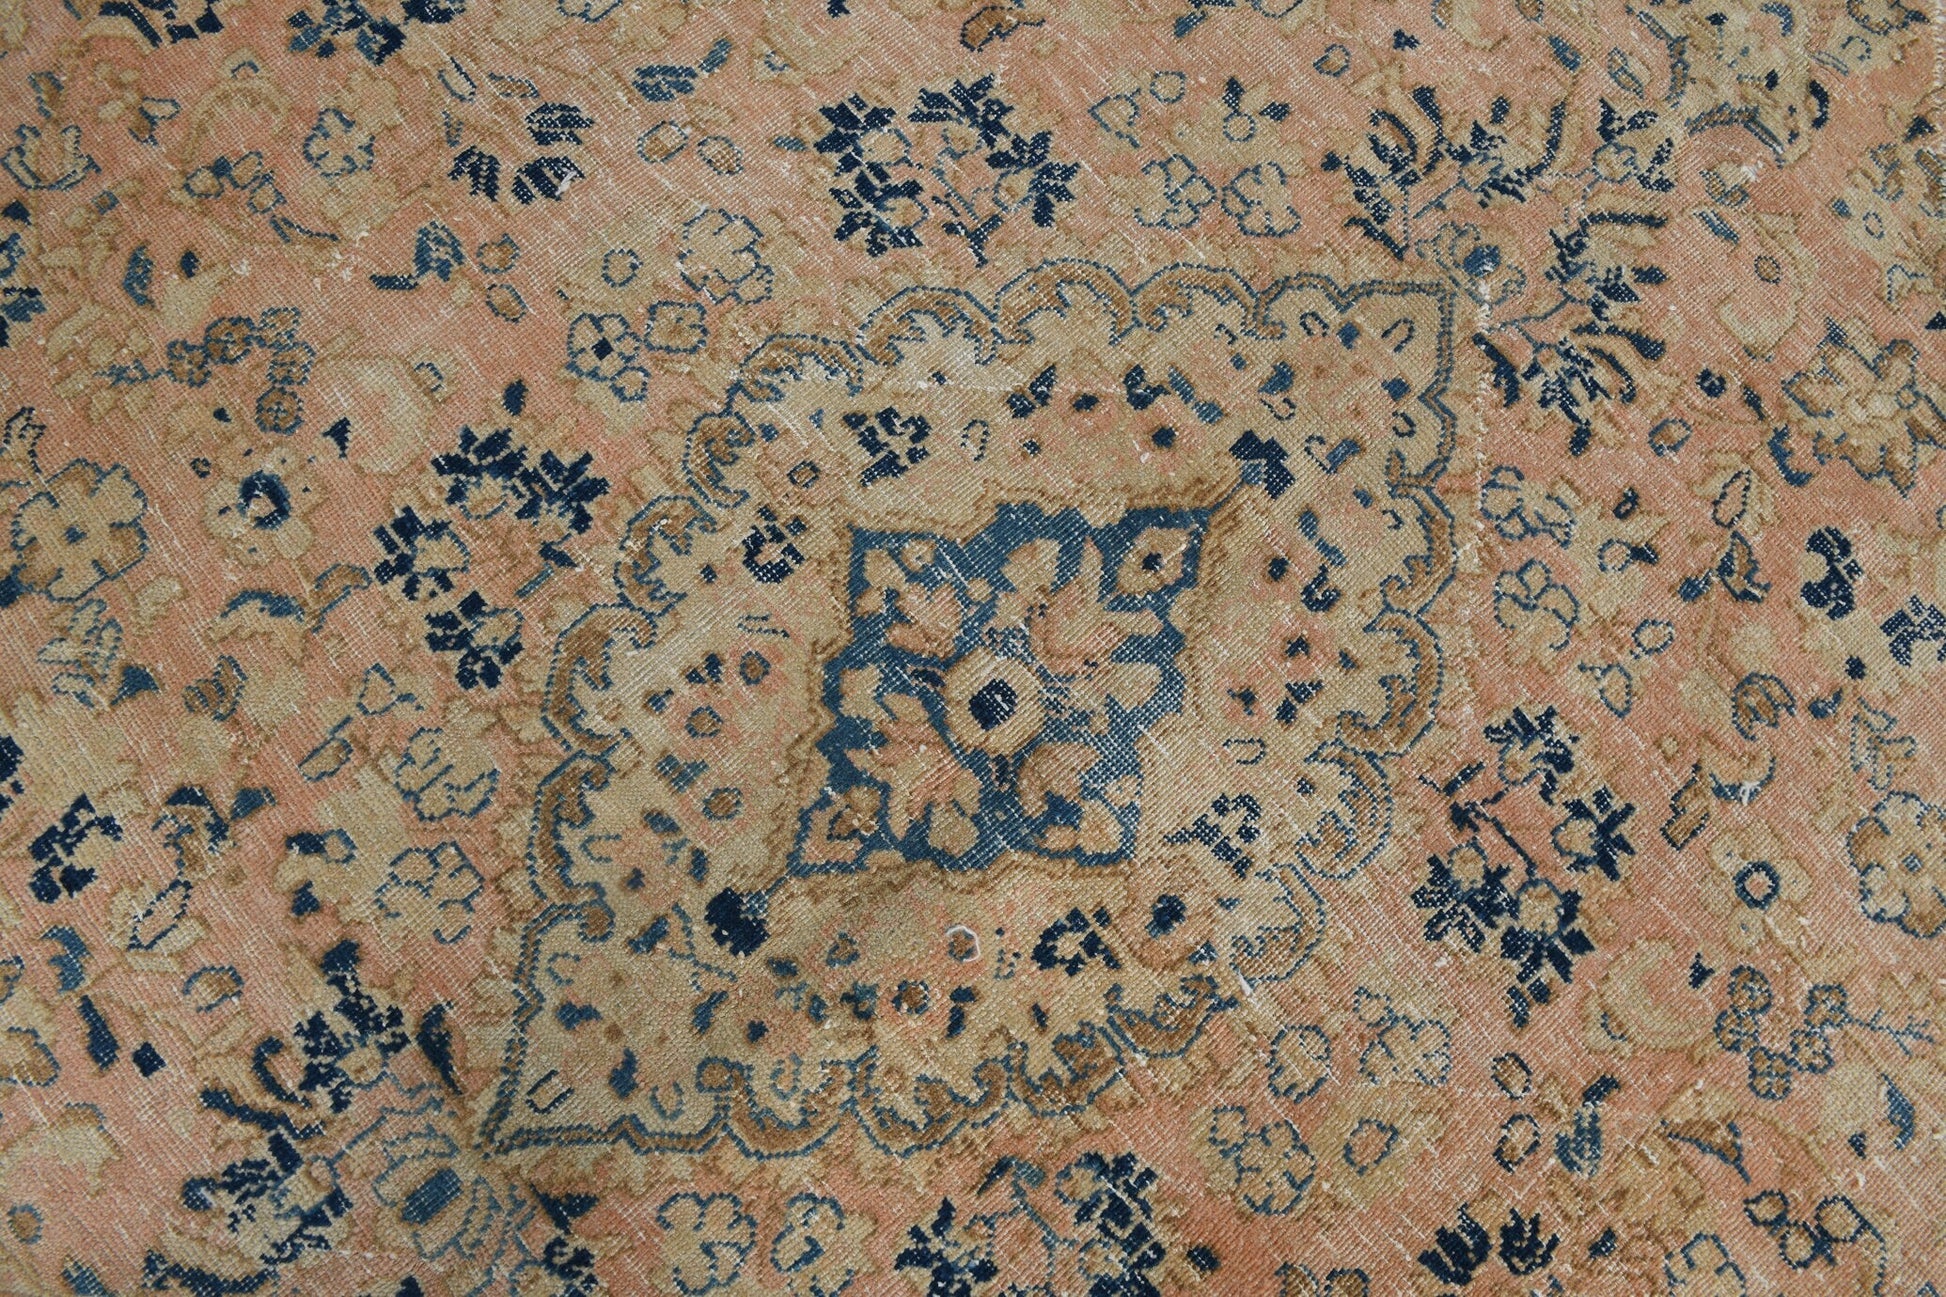 10’ x 13’ Vintage Persian Style Rug - 18763 - Zengoda Shop online from Artisan Brands